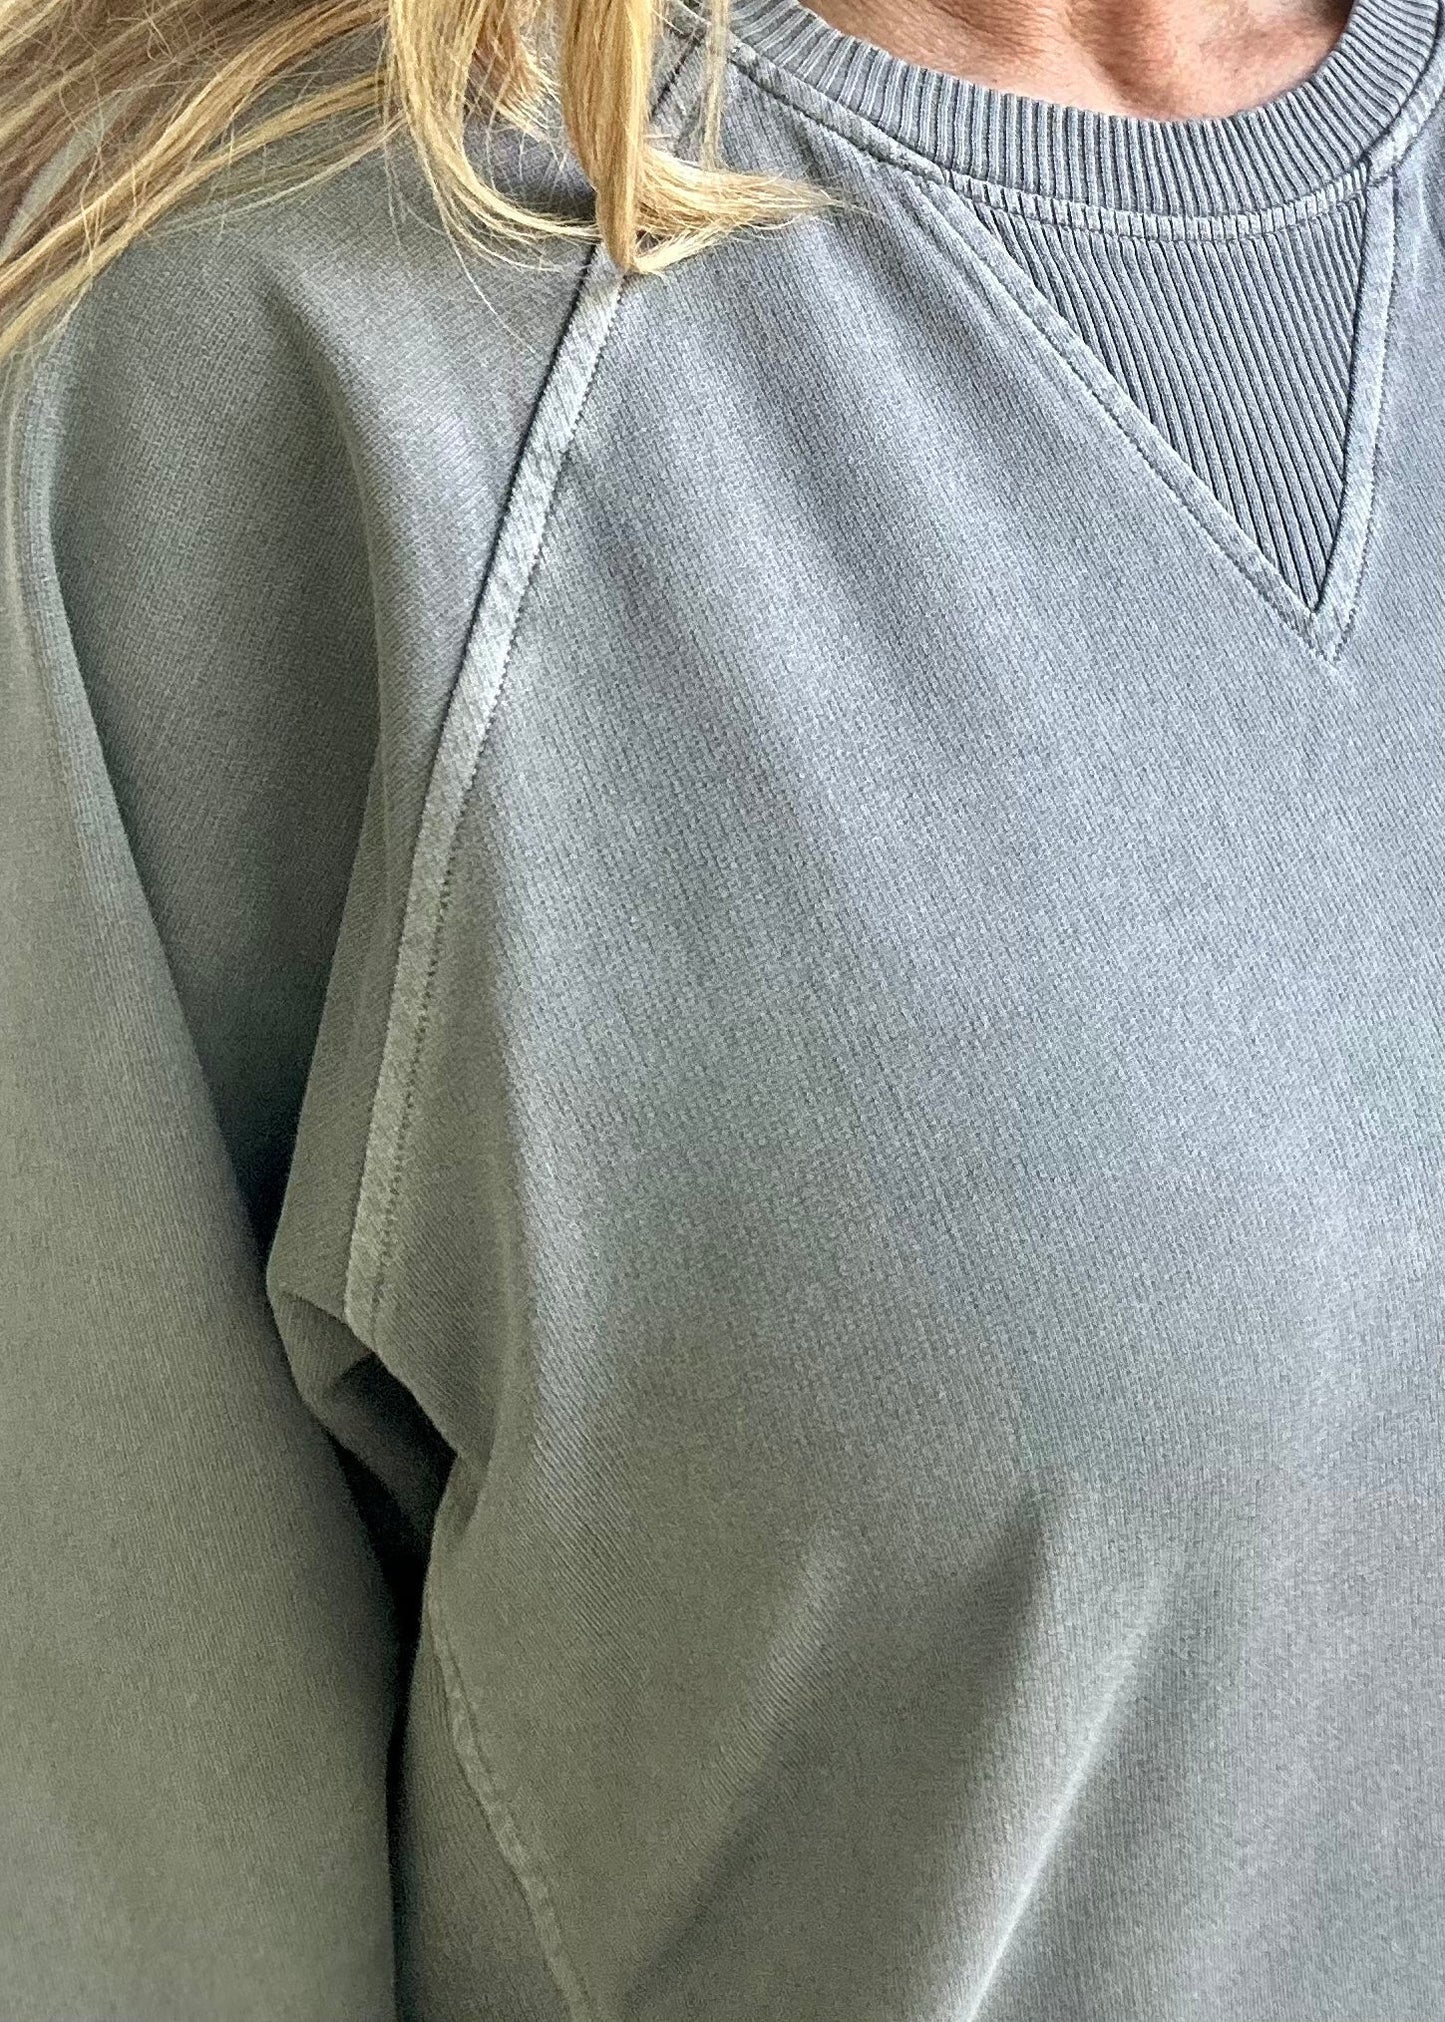 Simple Sutton Sweatshirt - Ash Black - sweatshirt - Jimberly's Boutique